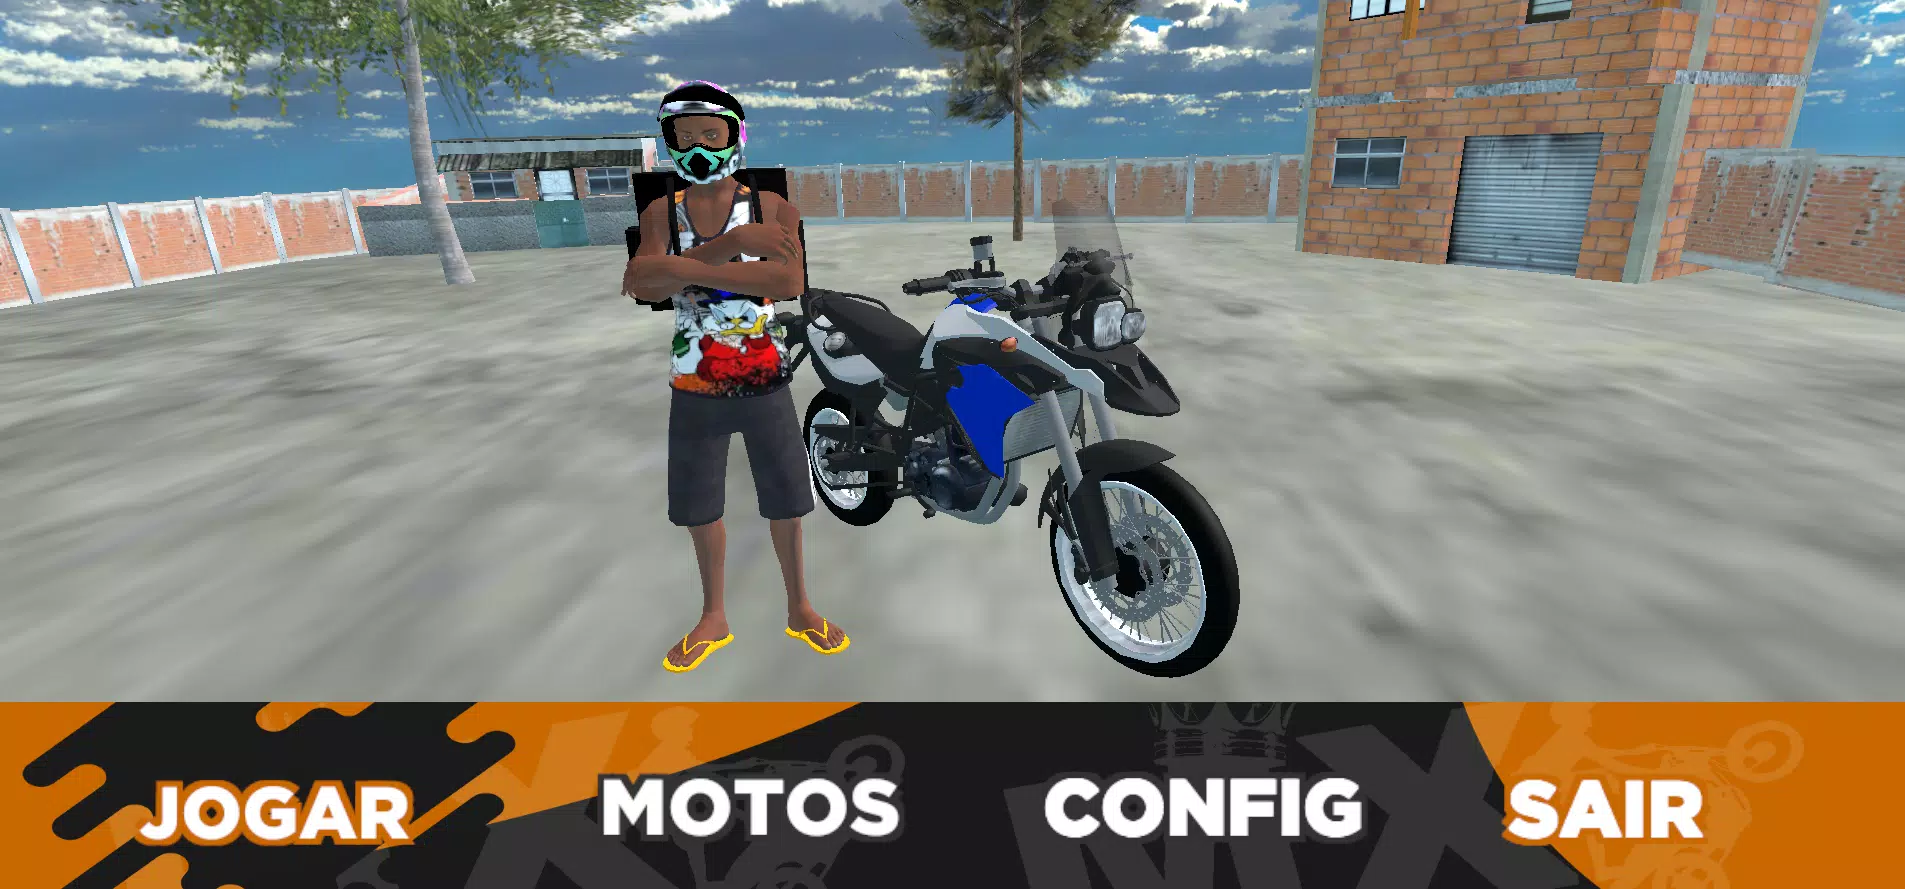 Baixe Mx bikes grau moto Master 3D no PC